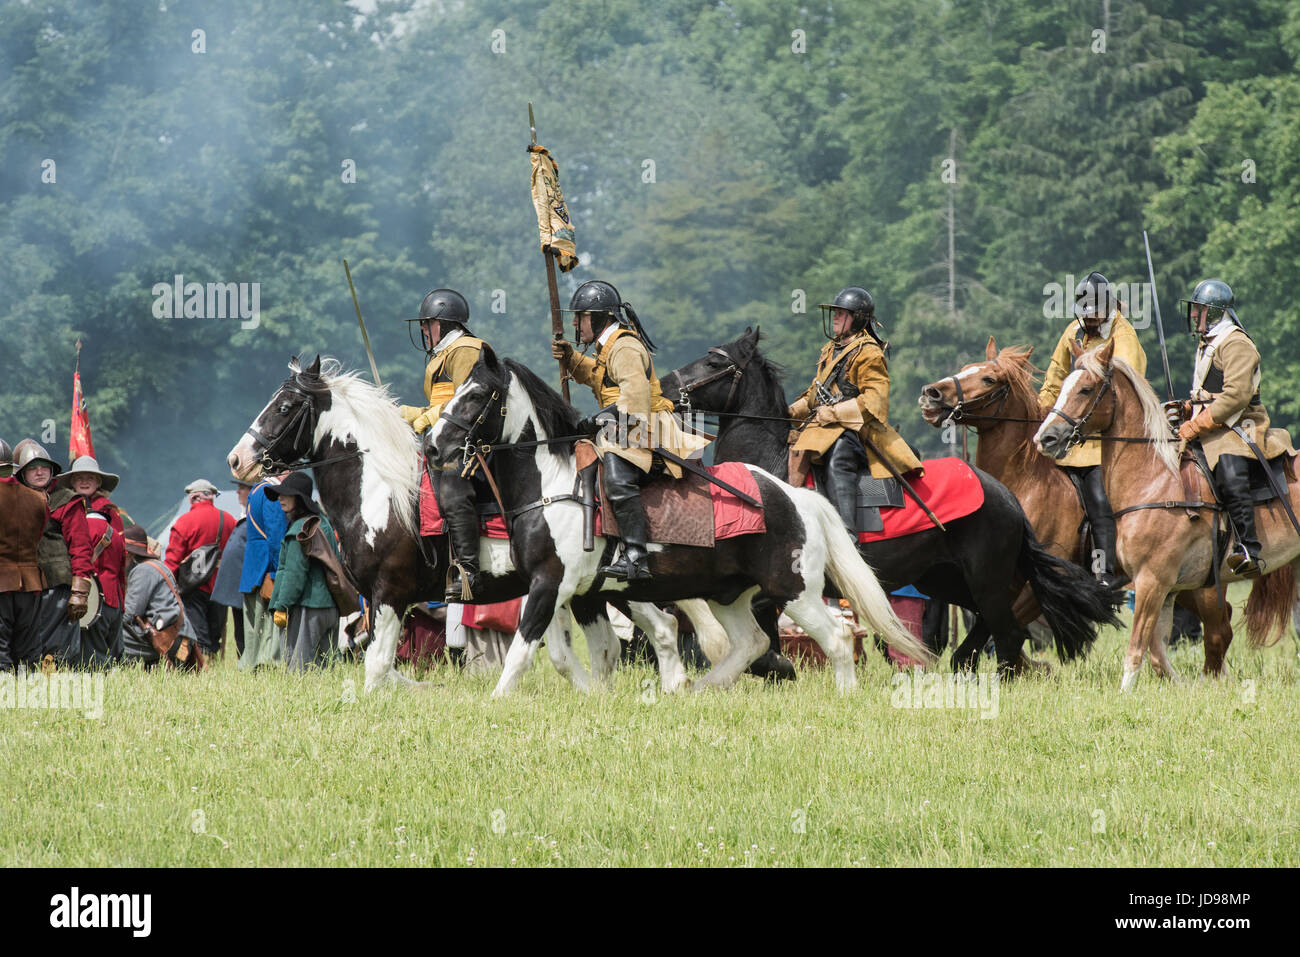 Roundhead cavalrymen in battle at a Sealed Knot English Civil war reenactment event. Charlton park, Malmesbury, Wiltshire, UK. Stock Photo